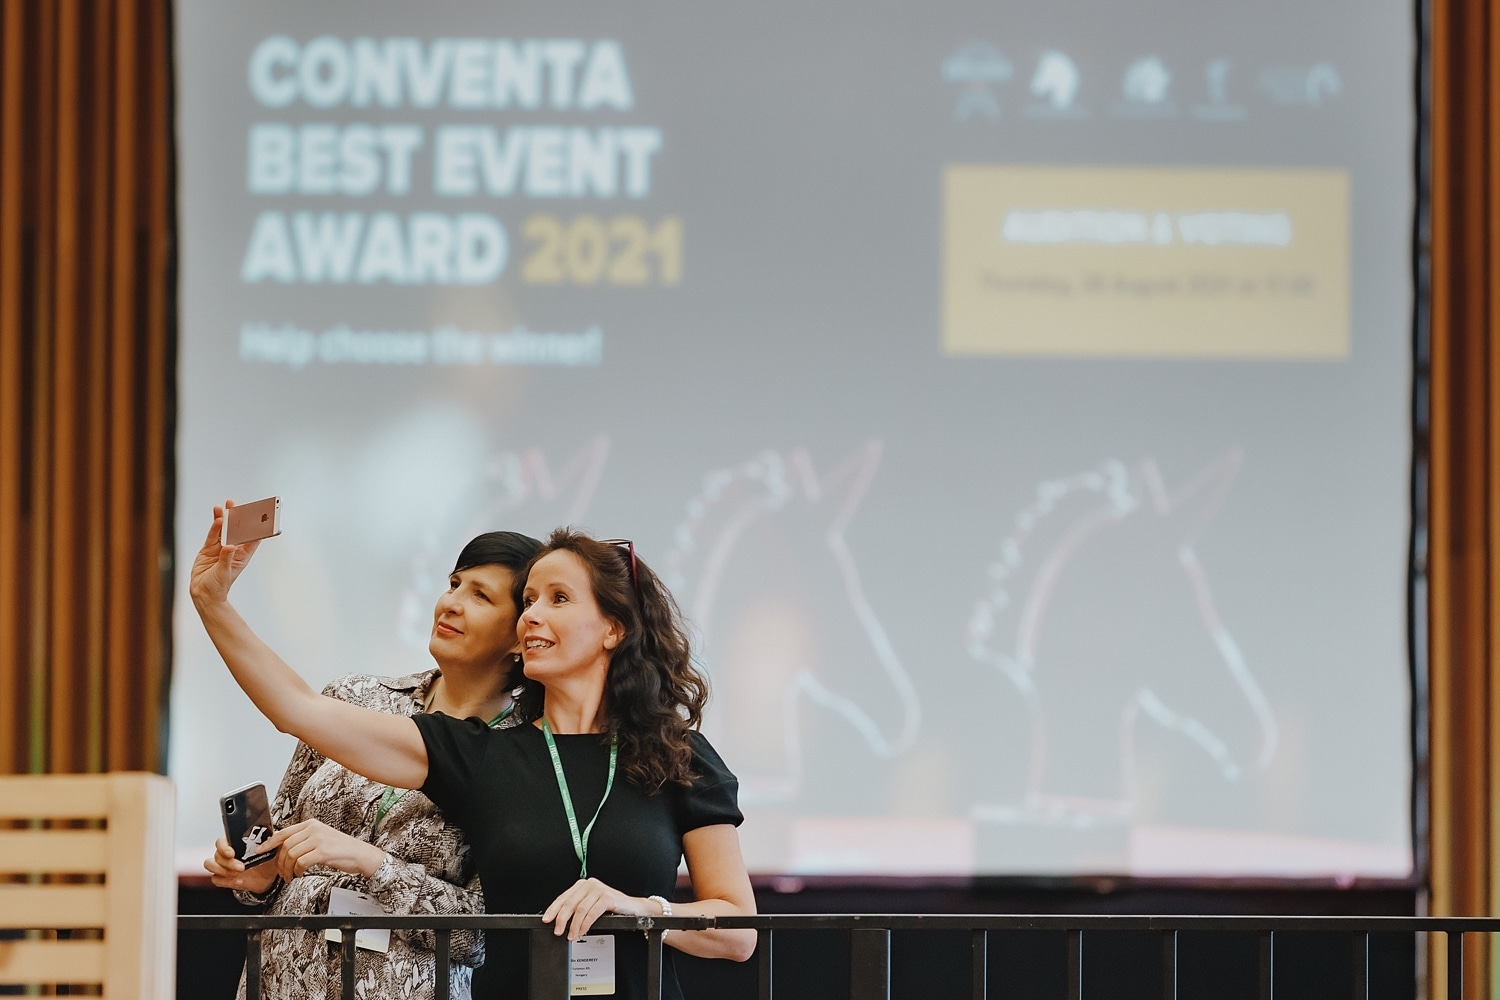 conventa-best-event-award-2022